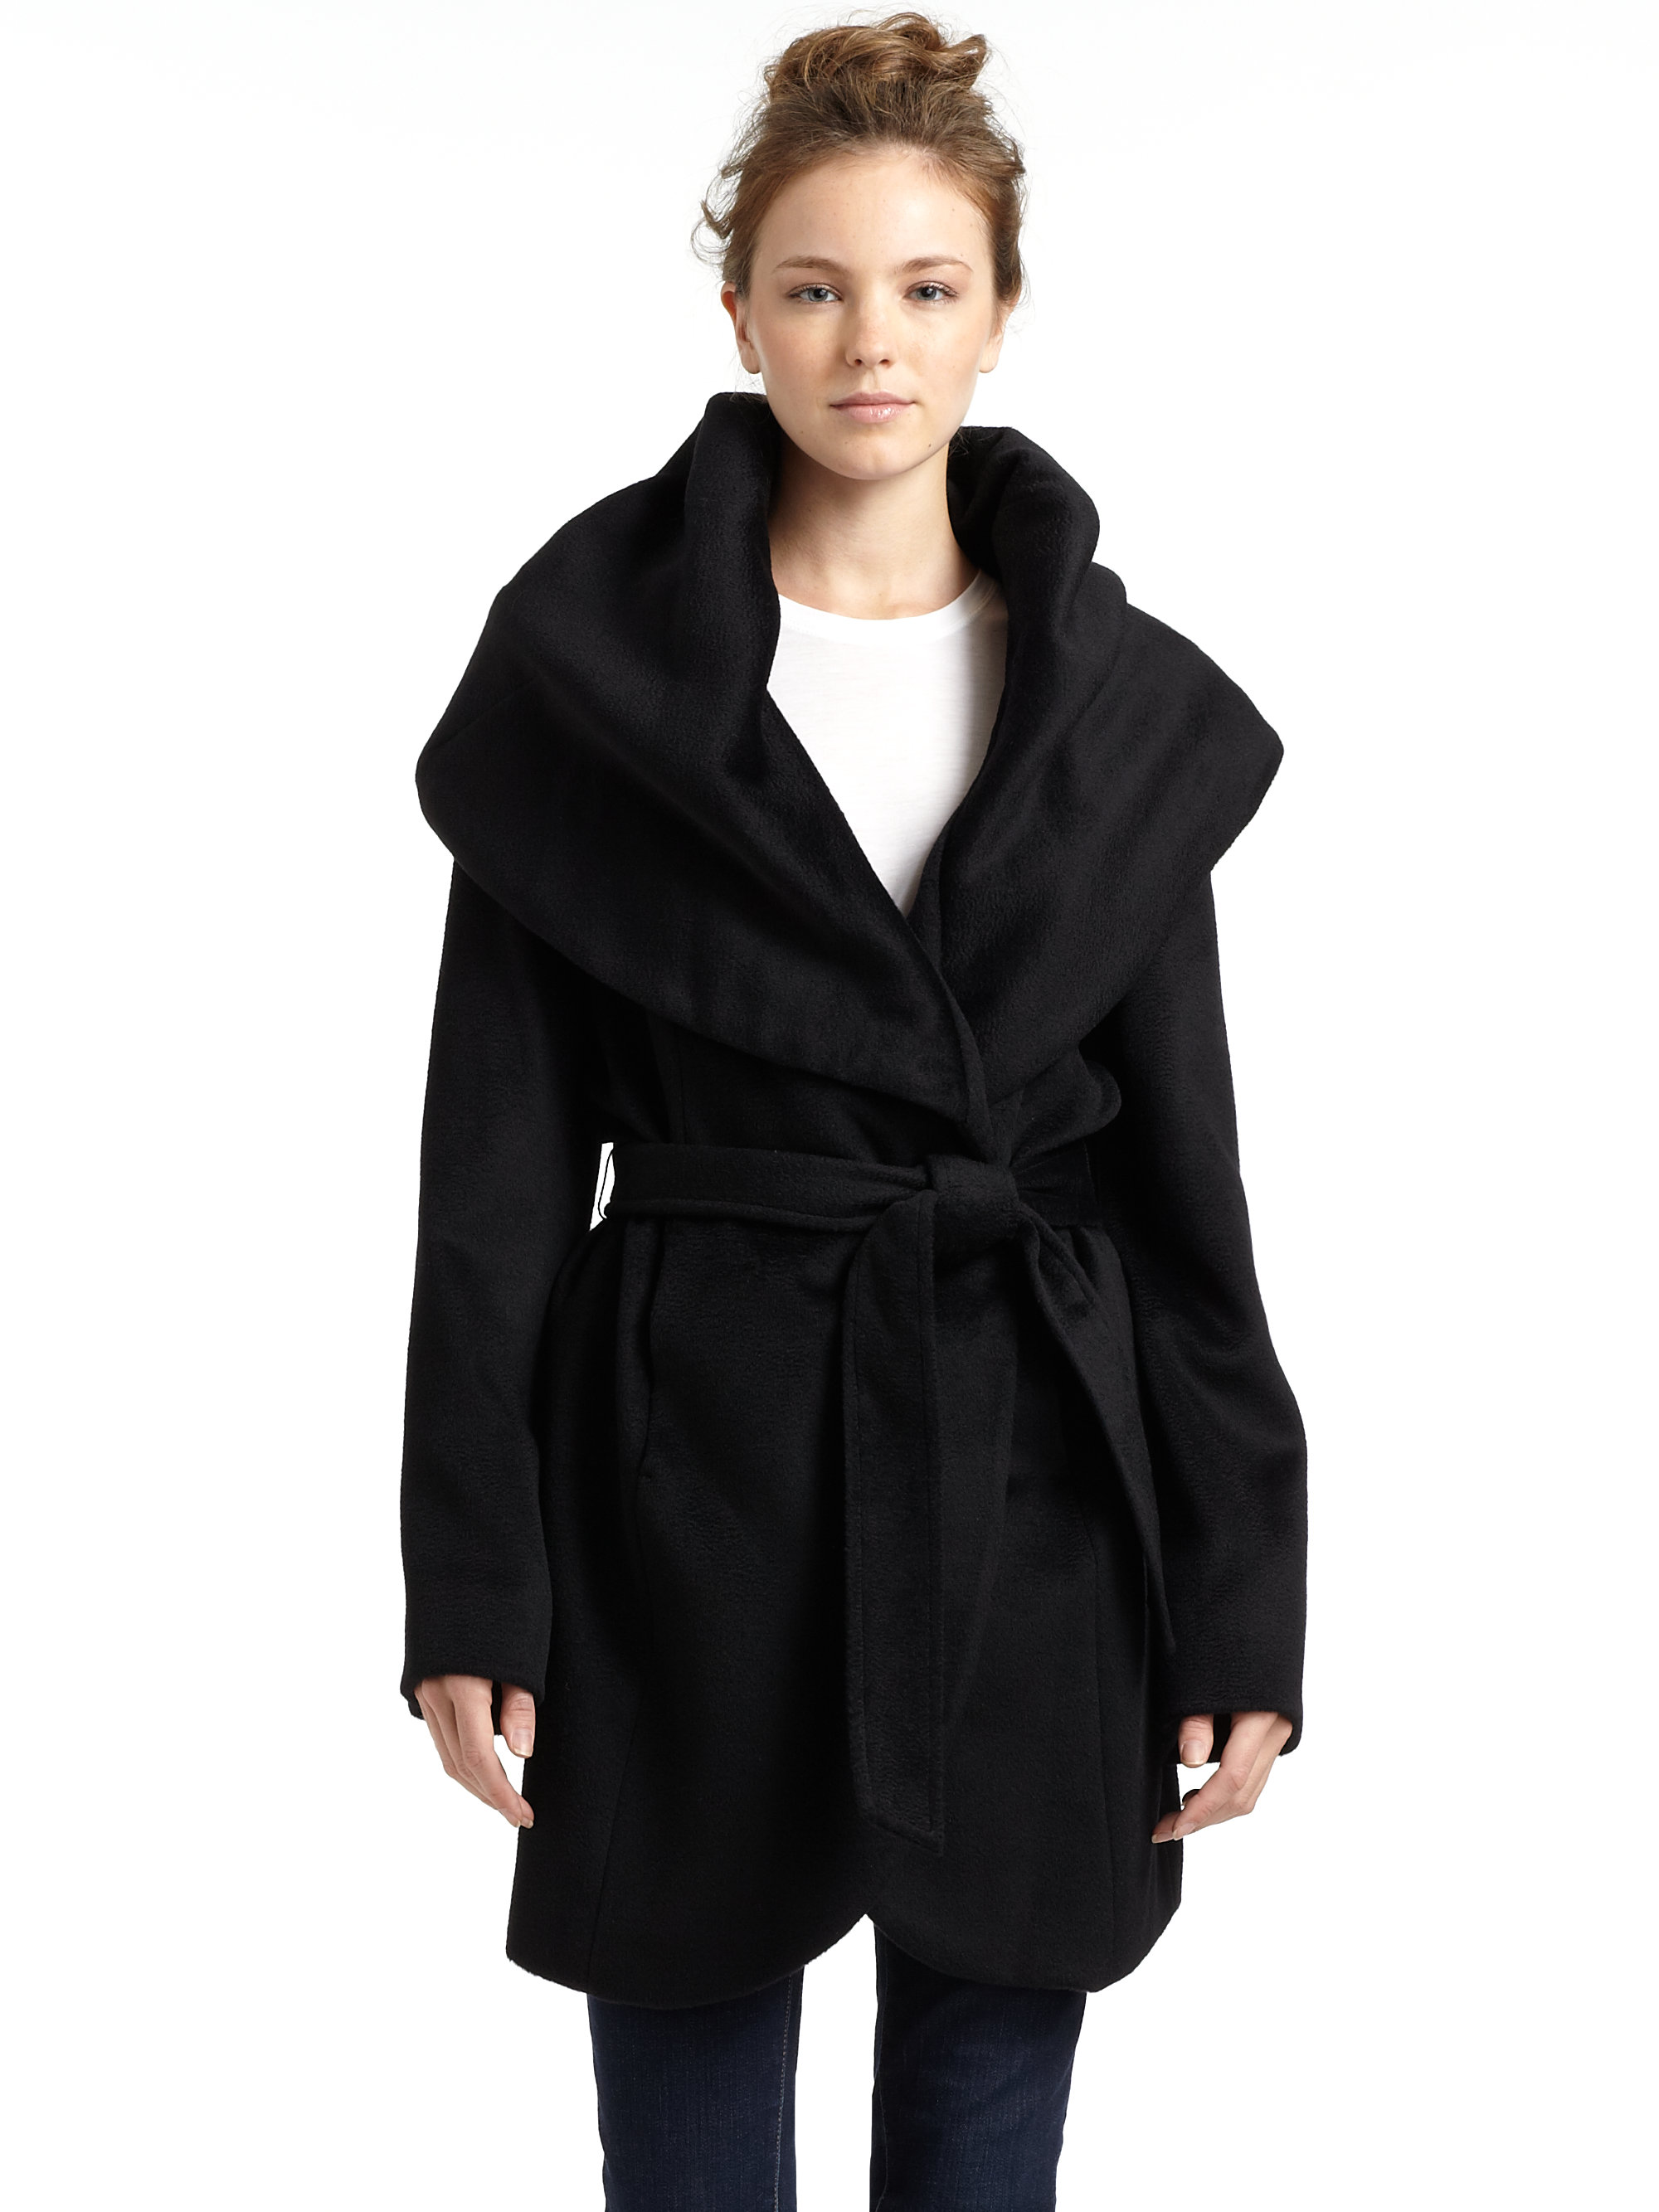 Lyst - Elie tahari Marla Wrap Coat in Black